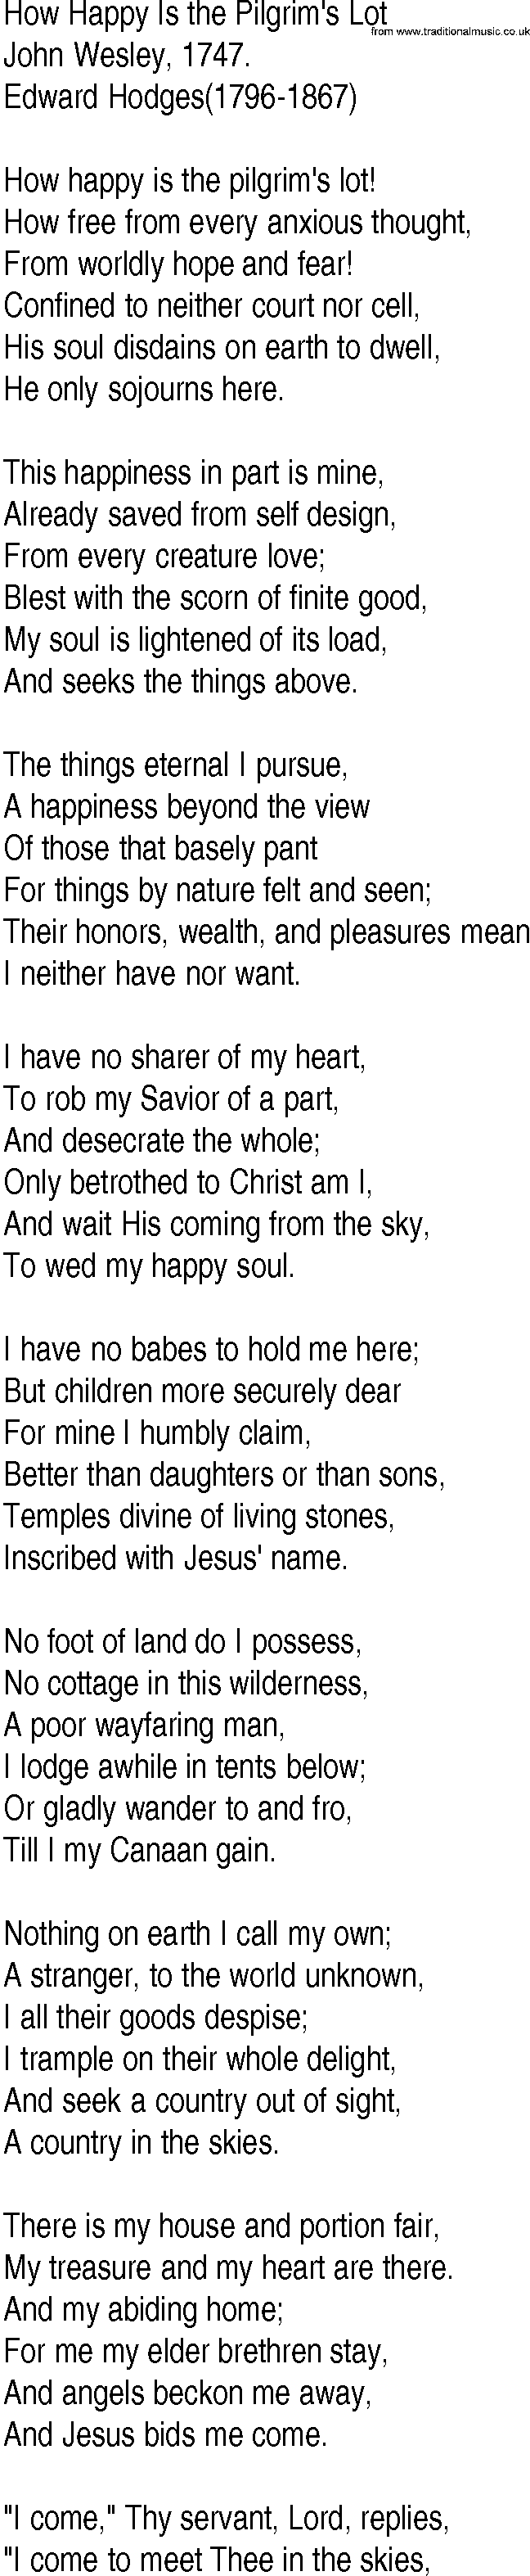 Hymn and Gospel Song: How Happy Is the Pilgrim's Lot by John Wesley lyrics